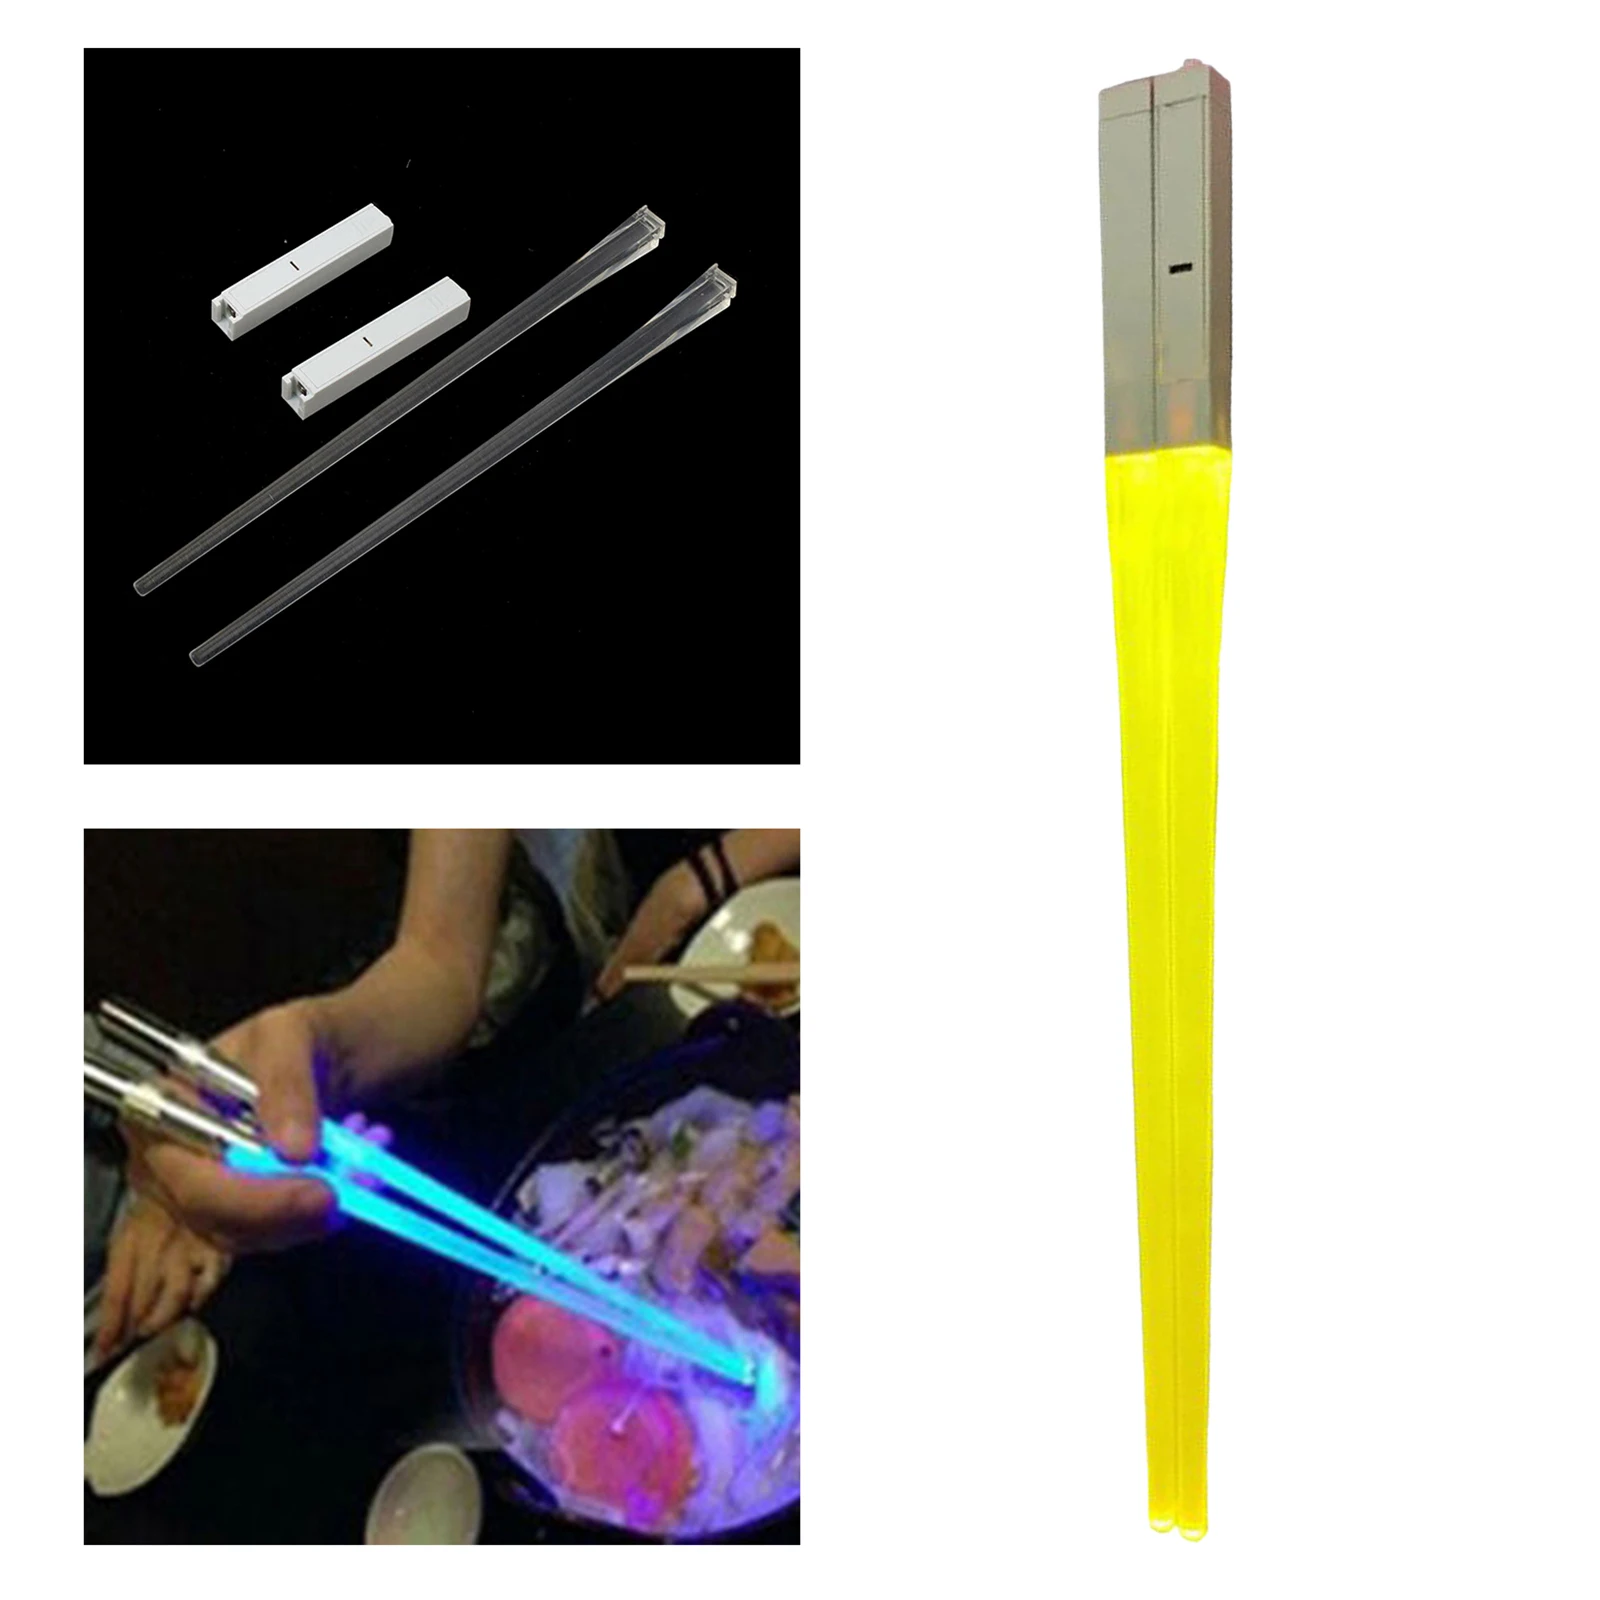 1 Pair of Light Up LED Lightsaber Chopsticks Durable Lightweight Portable BPA Free and Food Safe